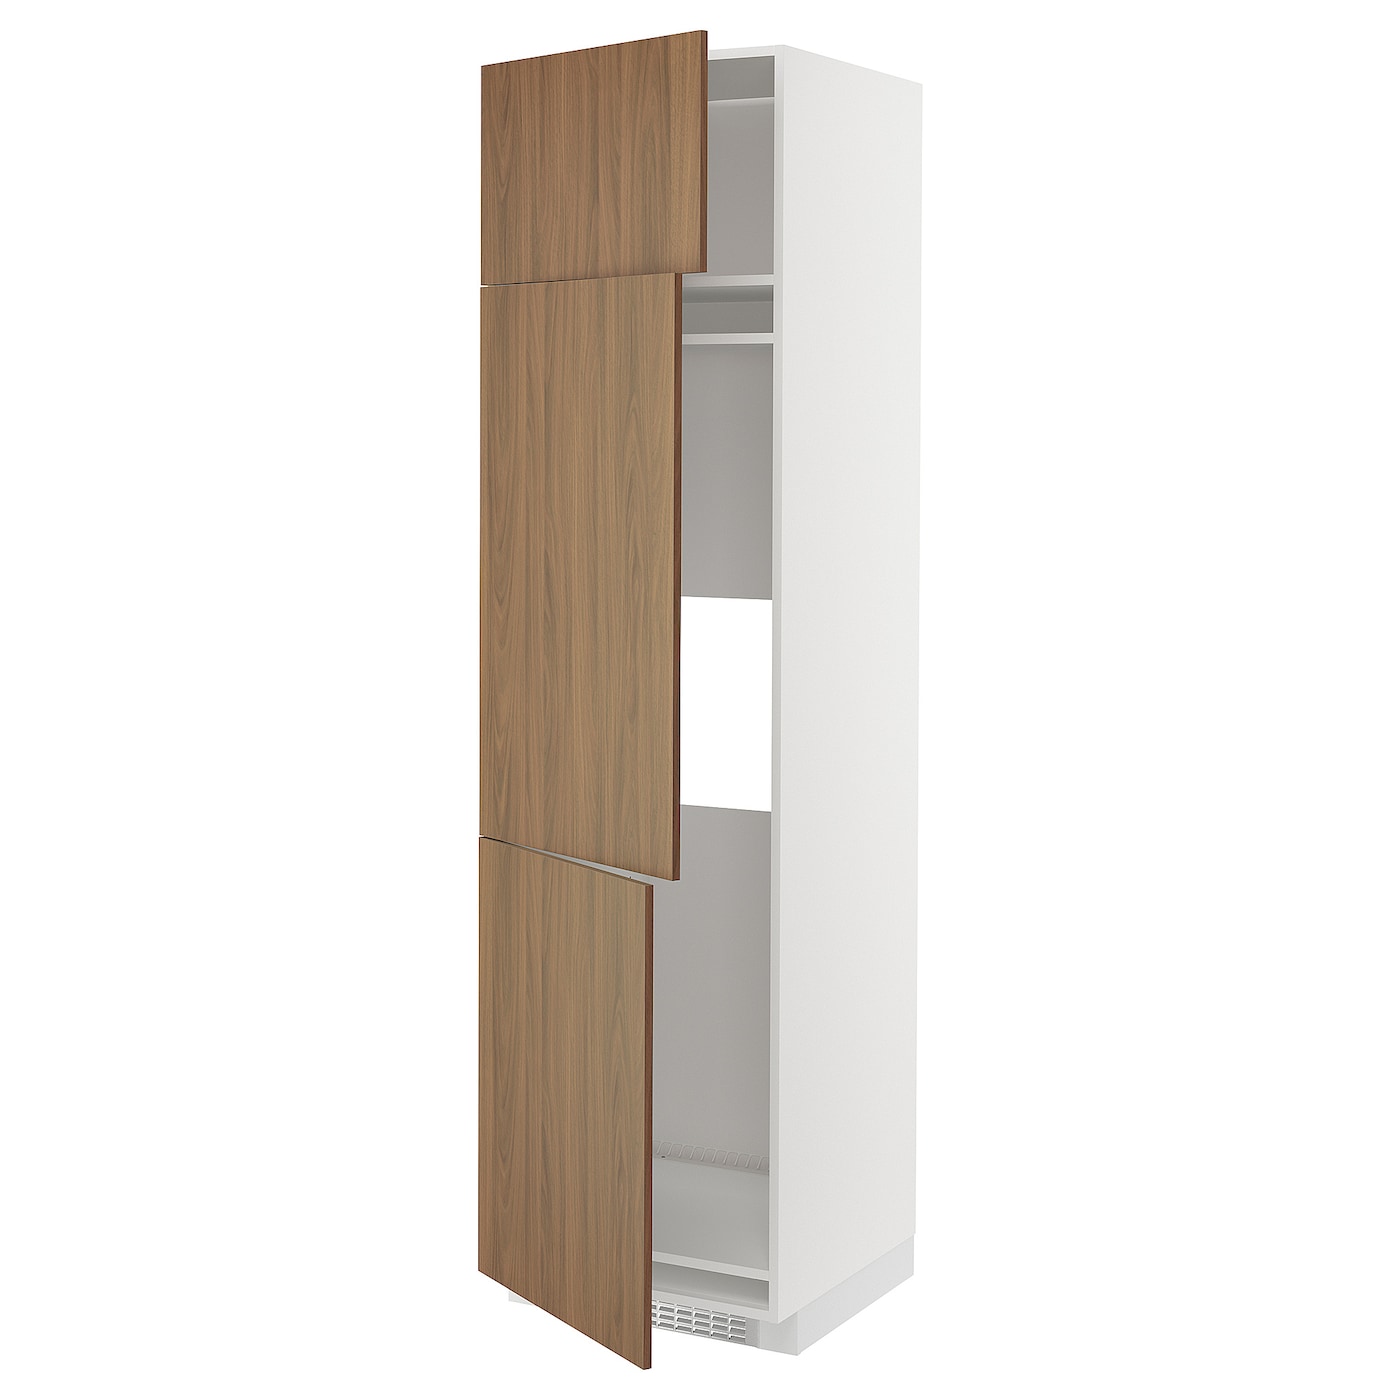 Высокий кухонный шкаф - IKEA METOD/МЕТОД ИКЕА, 220х60х60 см, белый/коричневый